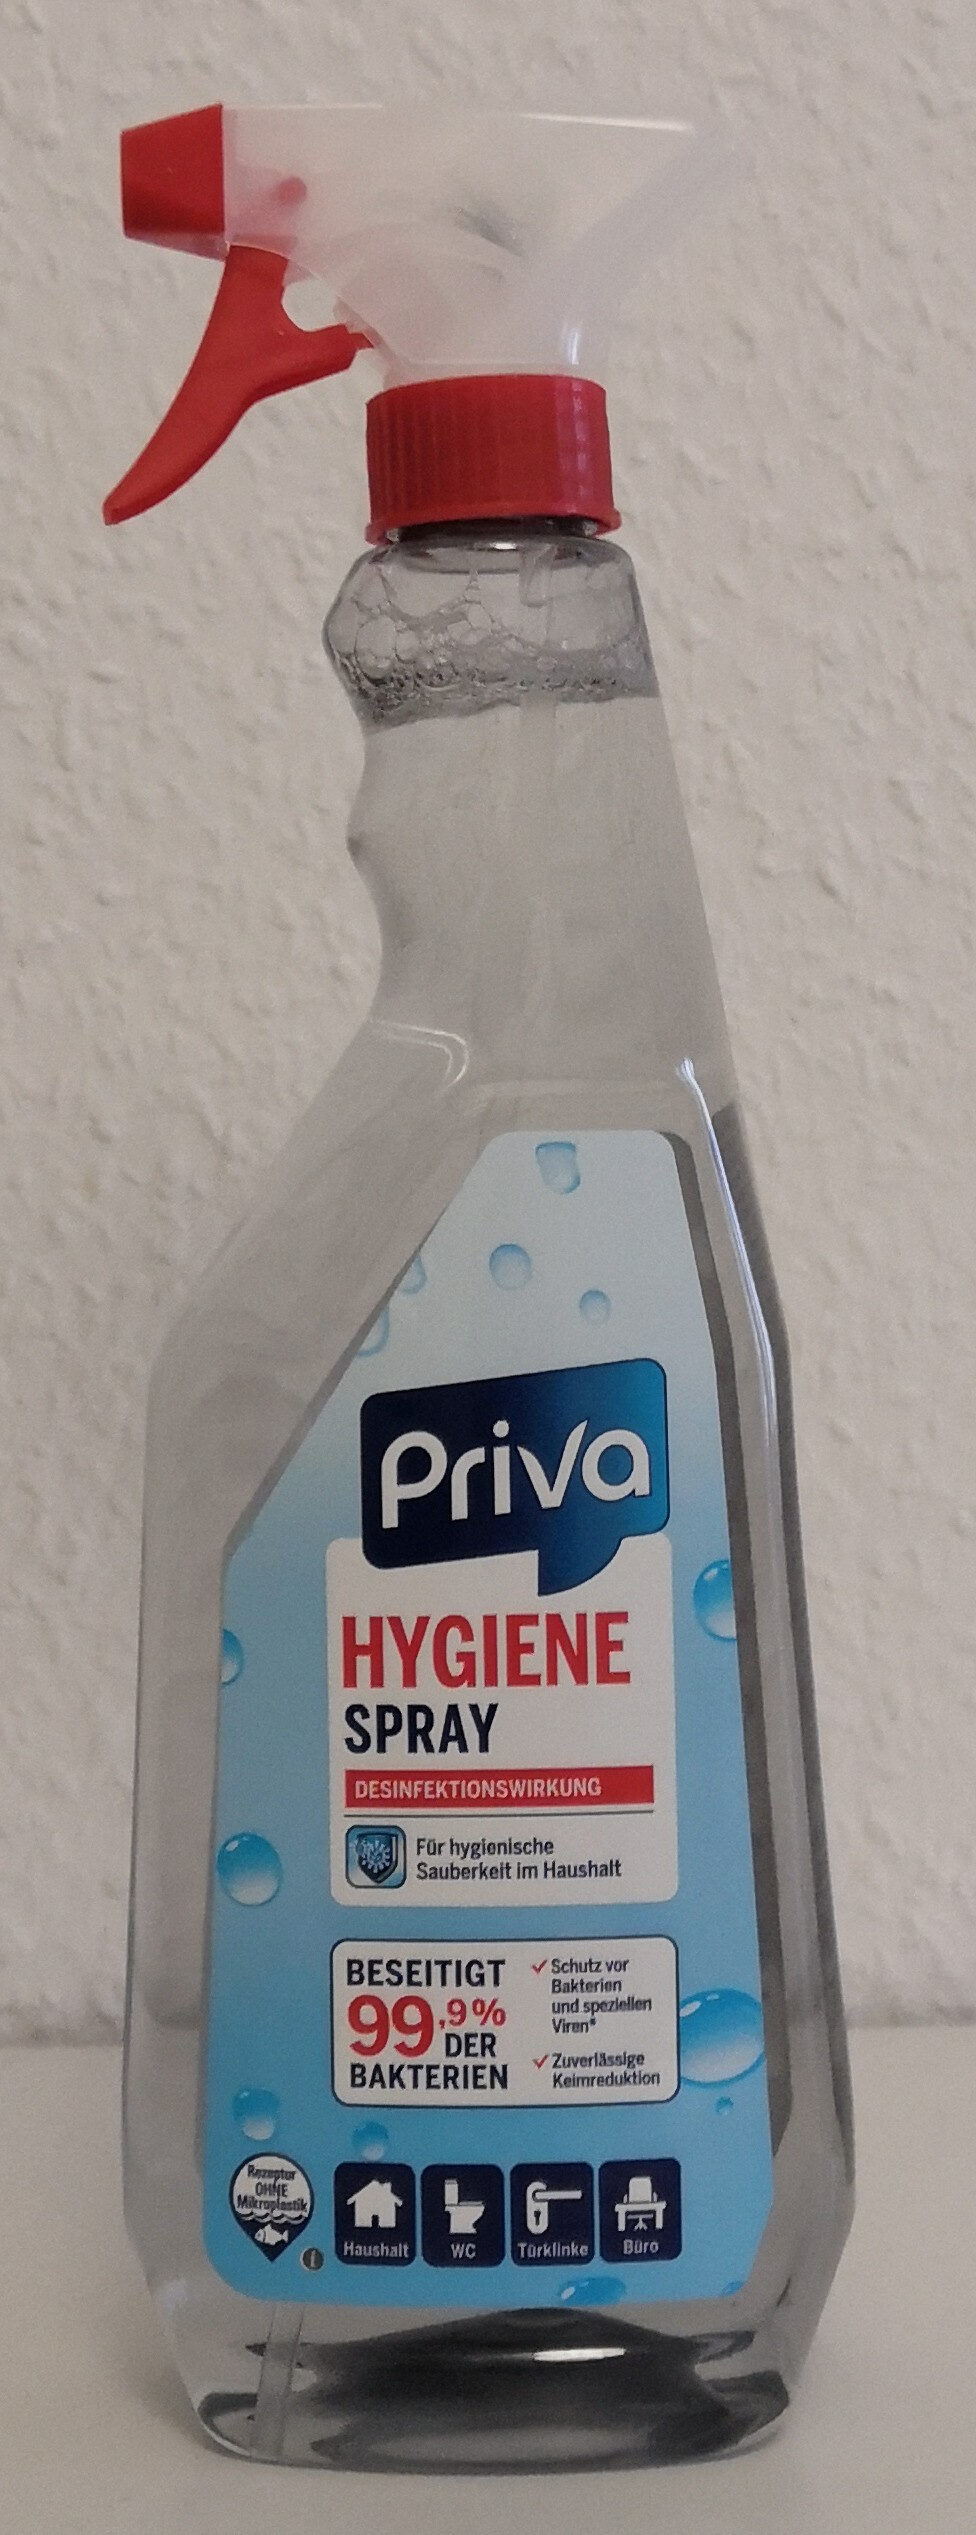 Hygiene Spray - Product - de